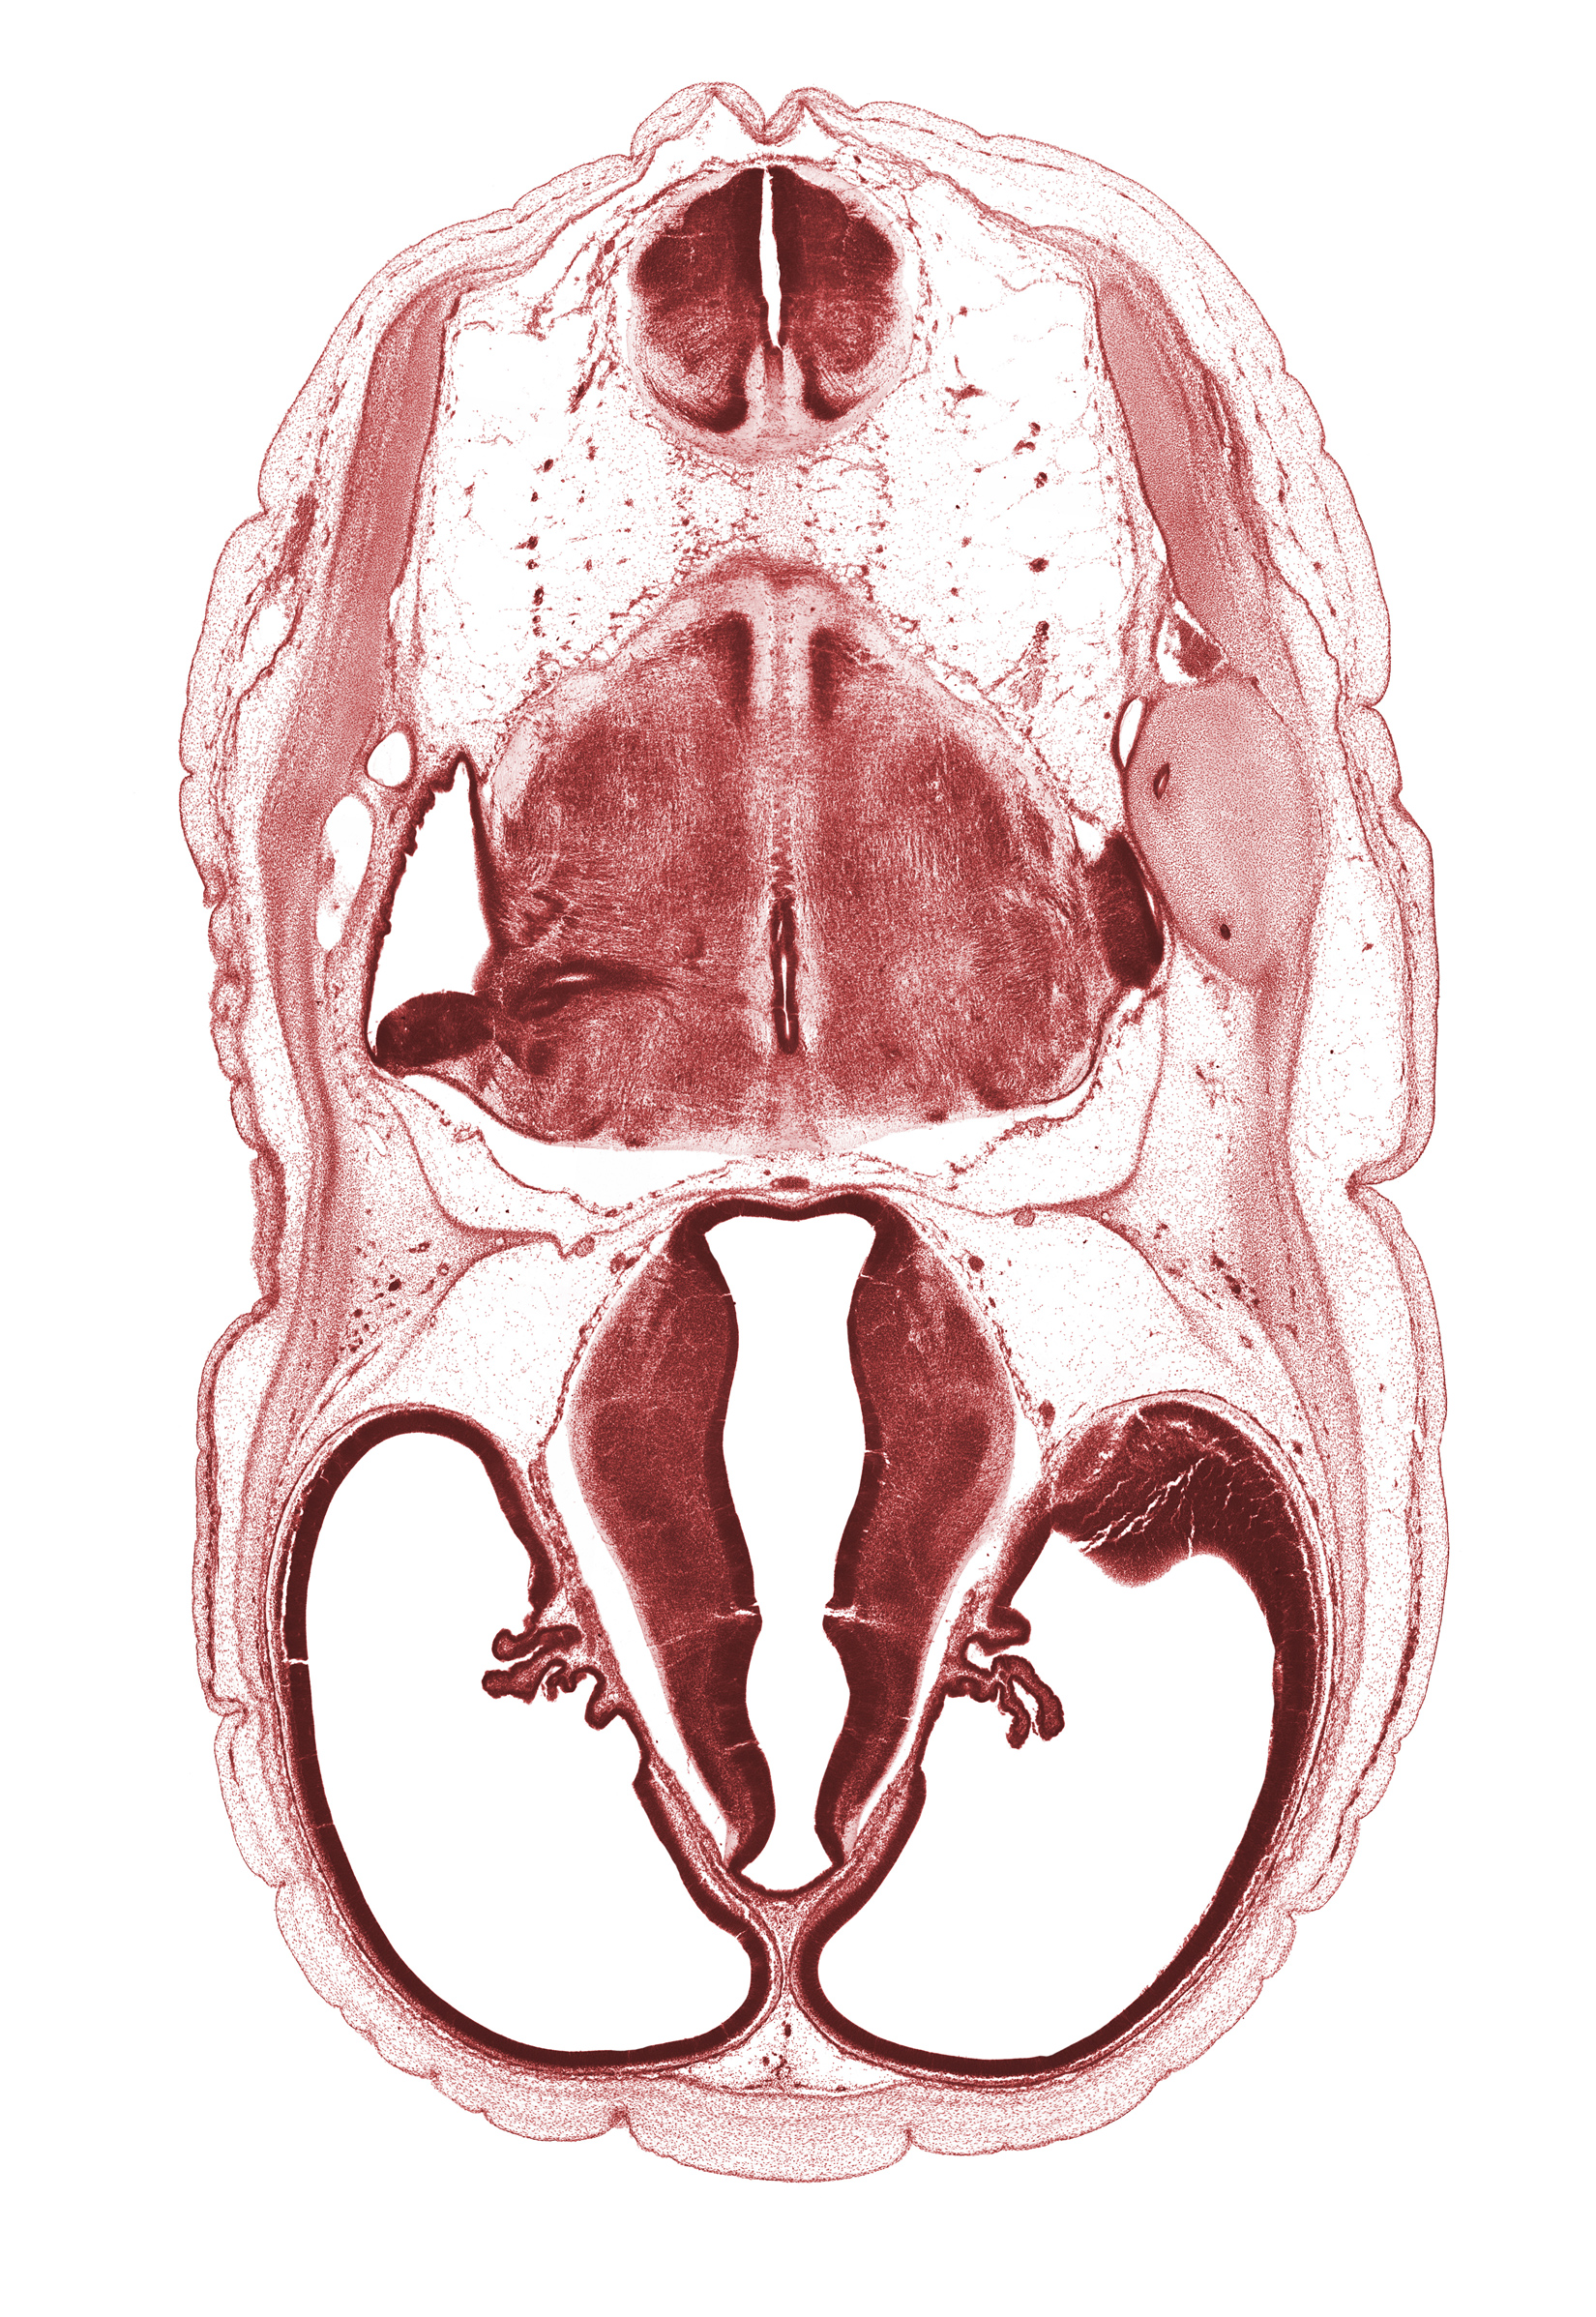 artifact space(s), basilar artery, choroid plexus, endolymphatic sac, exoccipital, hypothalamic sulcus, hypothalamus, lateral ventricular eminence (telencephalon), otic capsule cartilage, posterior communicating artery, posterior semicircular duct, region of cervical flexure, sigmoid sinus, subarachnoid space, sulcus medius, vascular plexus